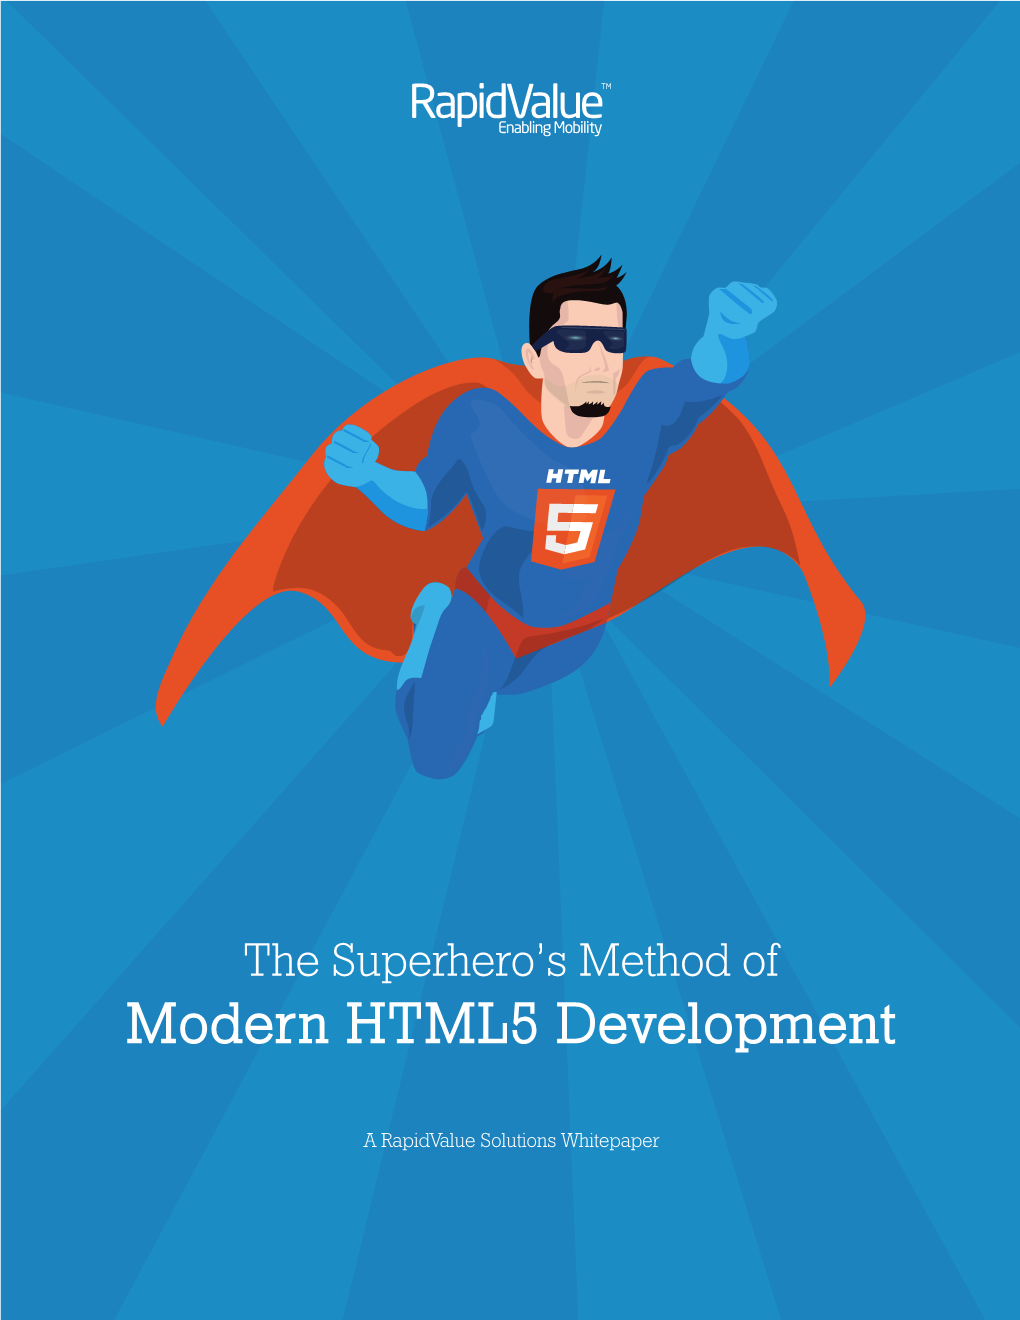 Modern HTML5 Development